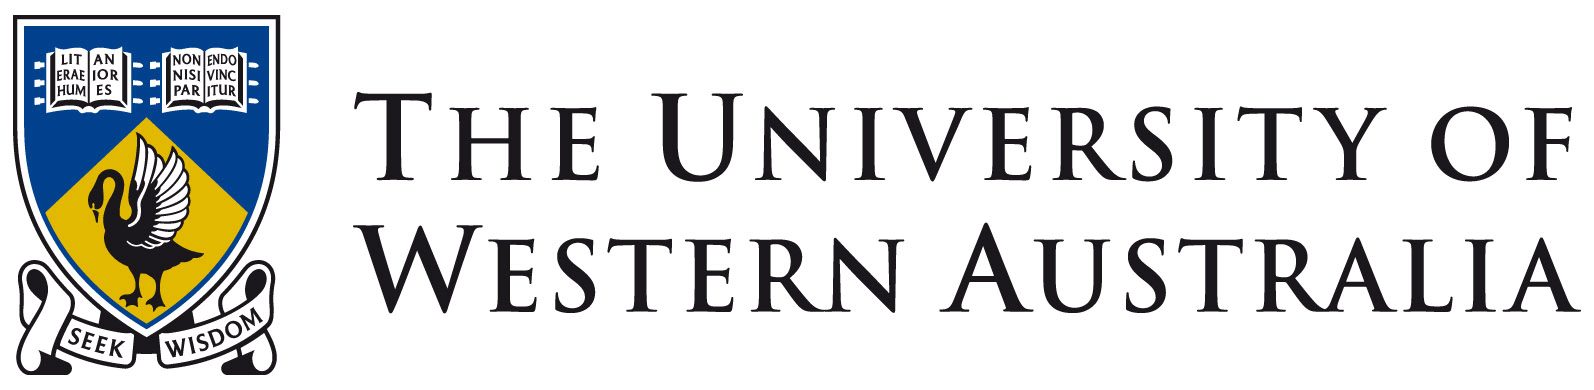 University of WA Logo - University of Western Australia.wa.gov.au